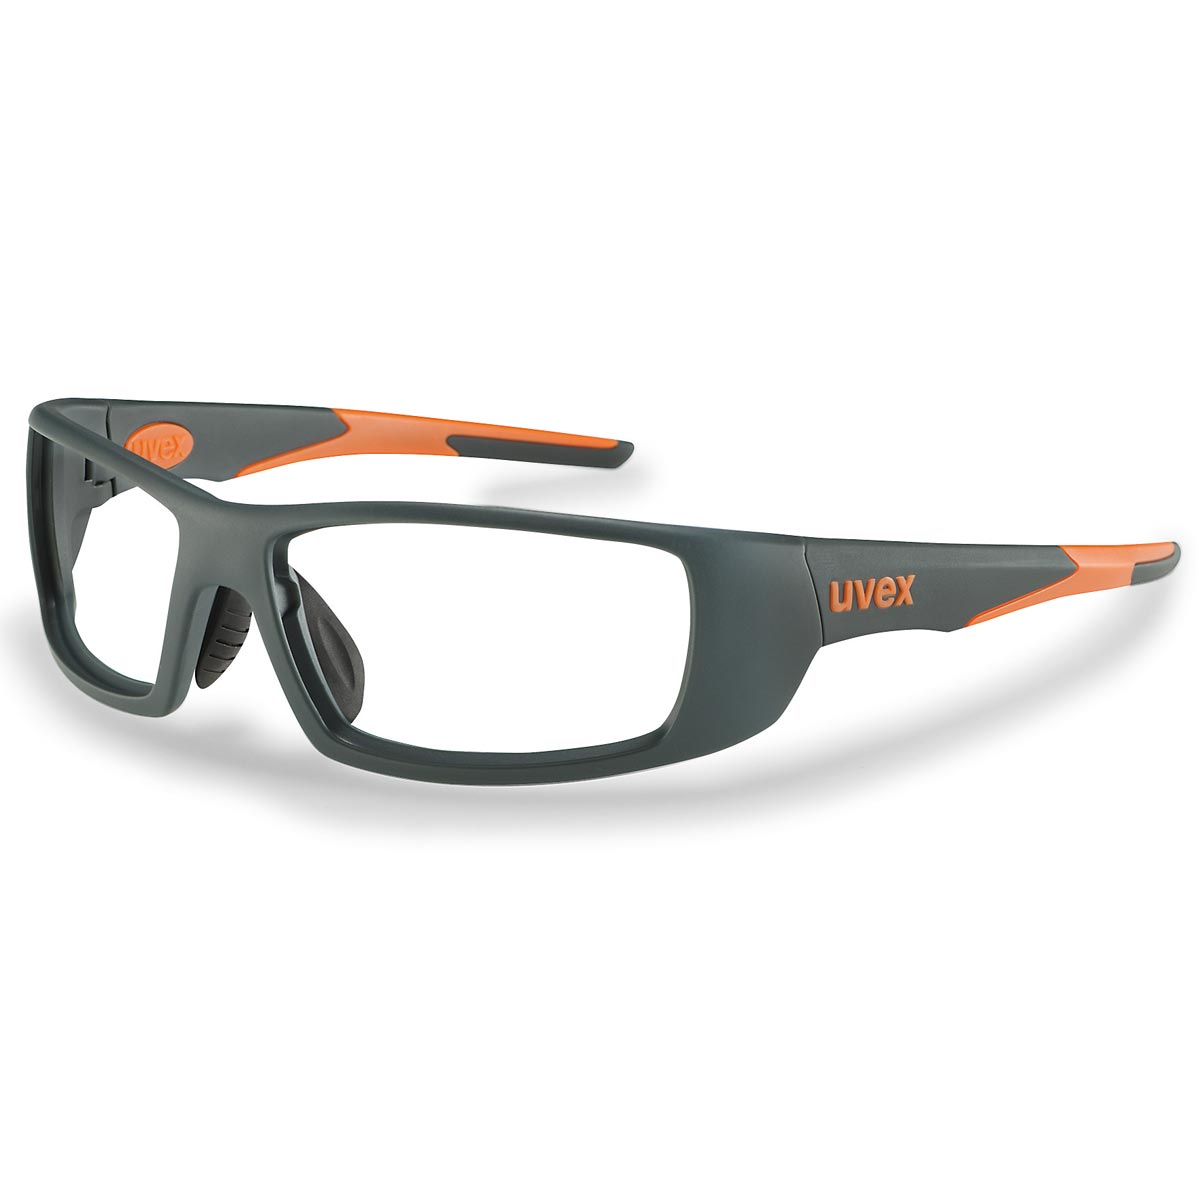 Uvex prescription safety glasses RX sp 5512 orange